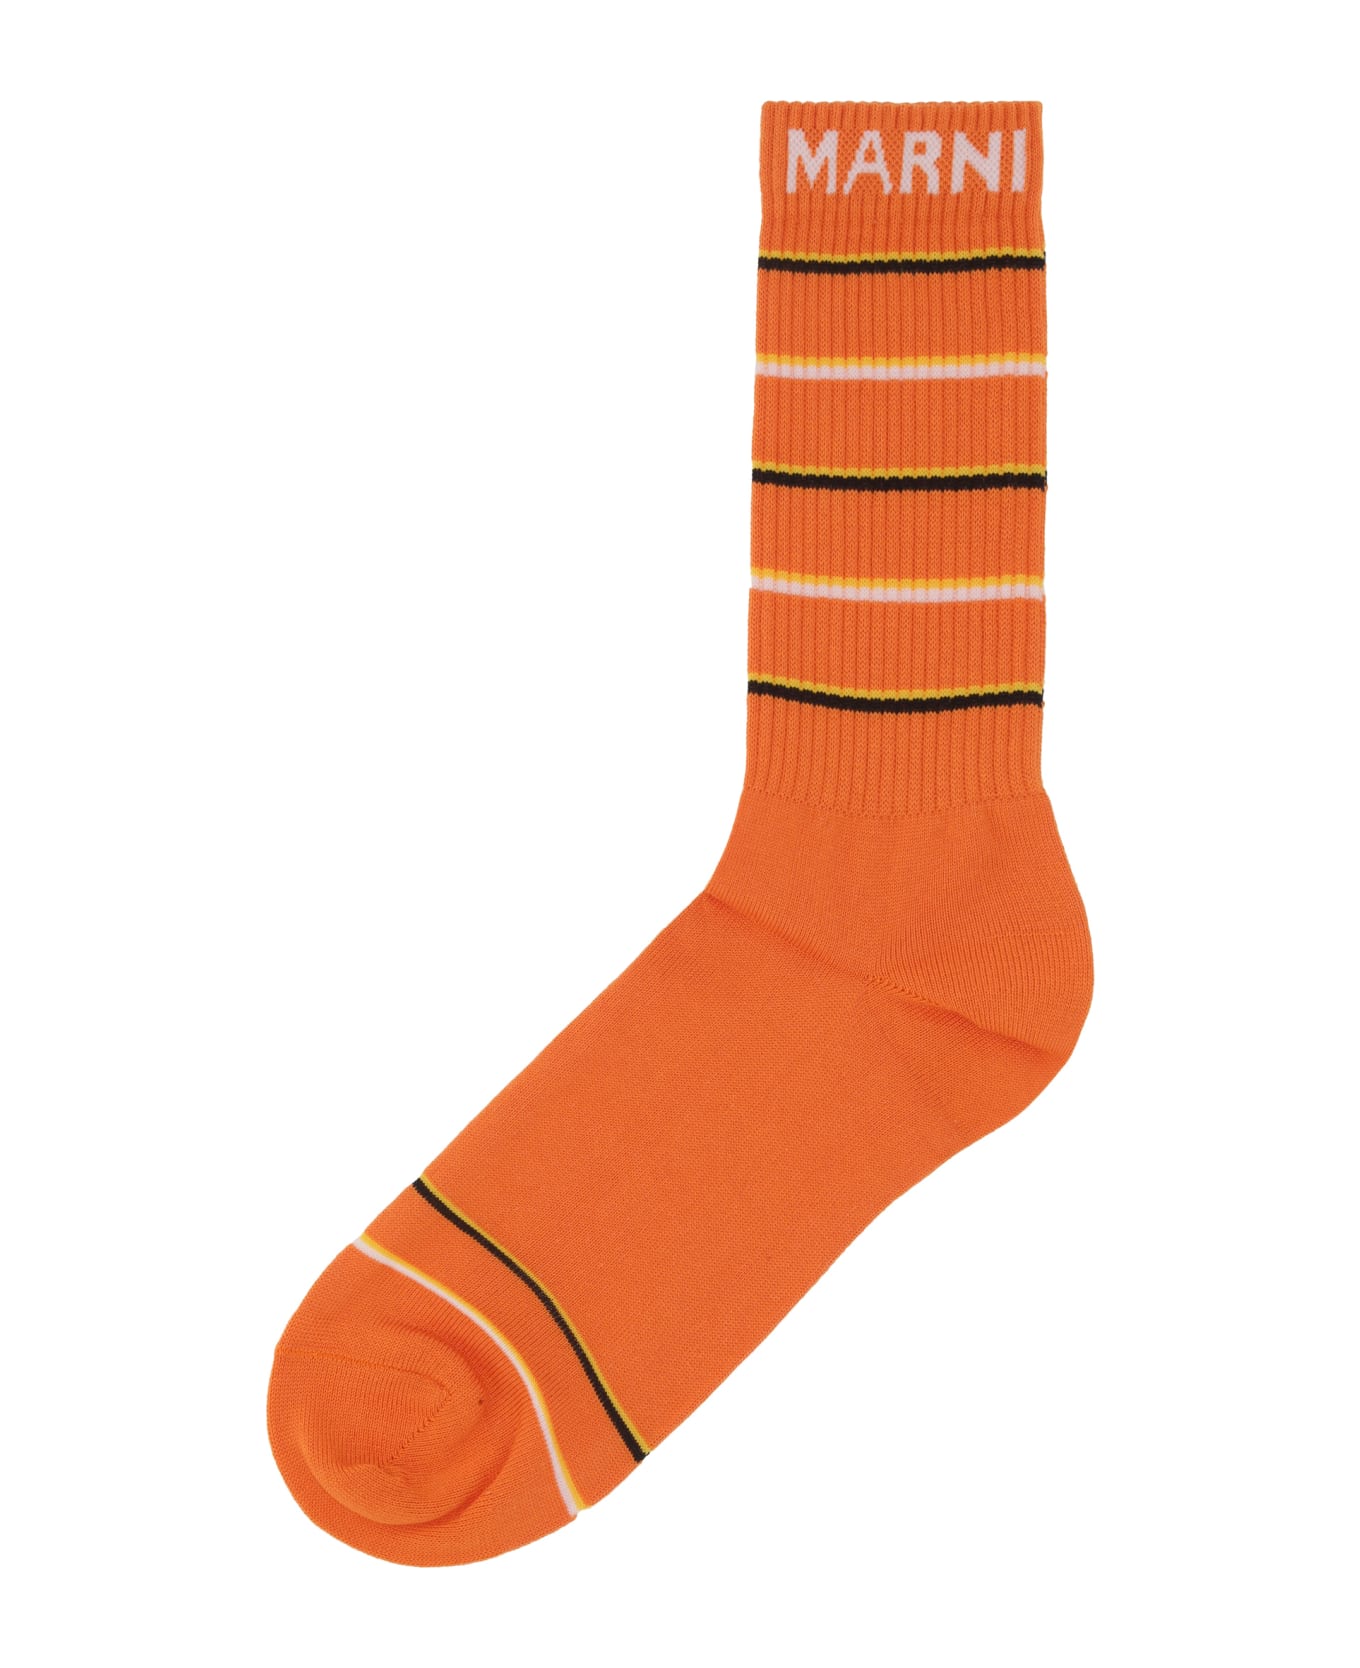 Marni Socks - Nectarine